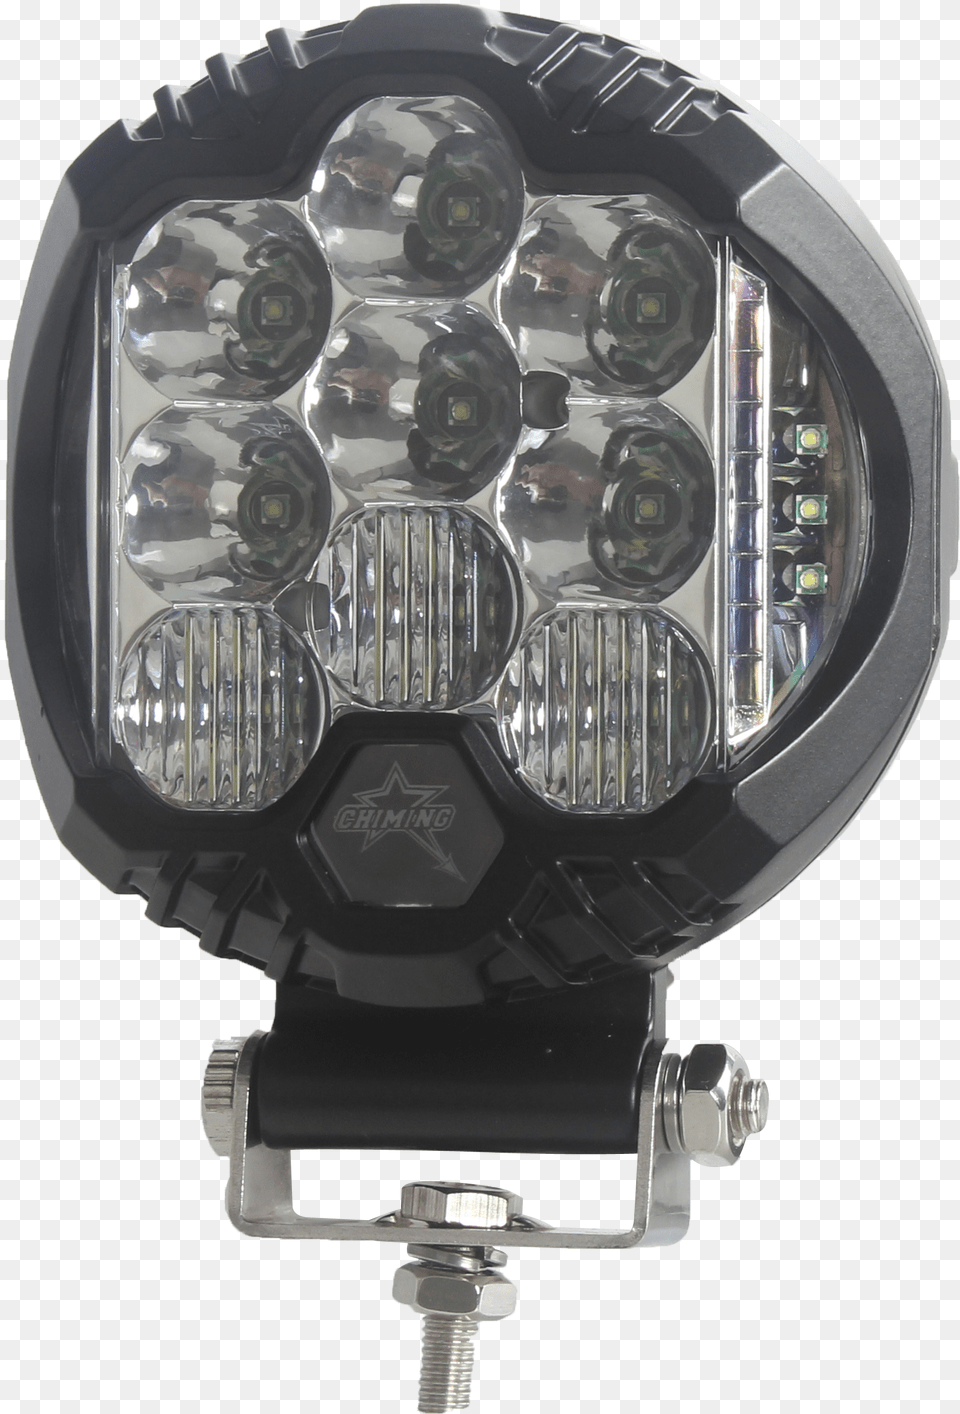 30 Watt Driving Light With Dual Side U0026 Angel Eyes Light, Headlight, Transportation, Vehicle, Car Png